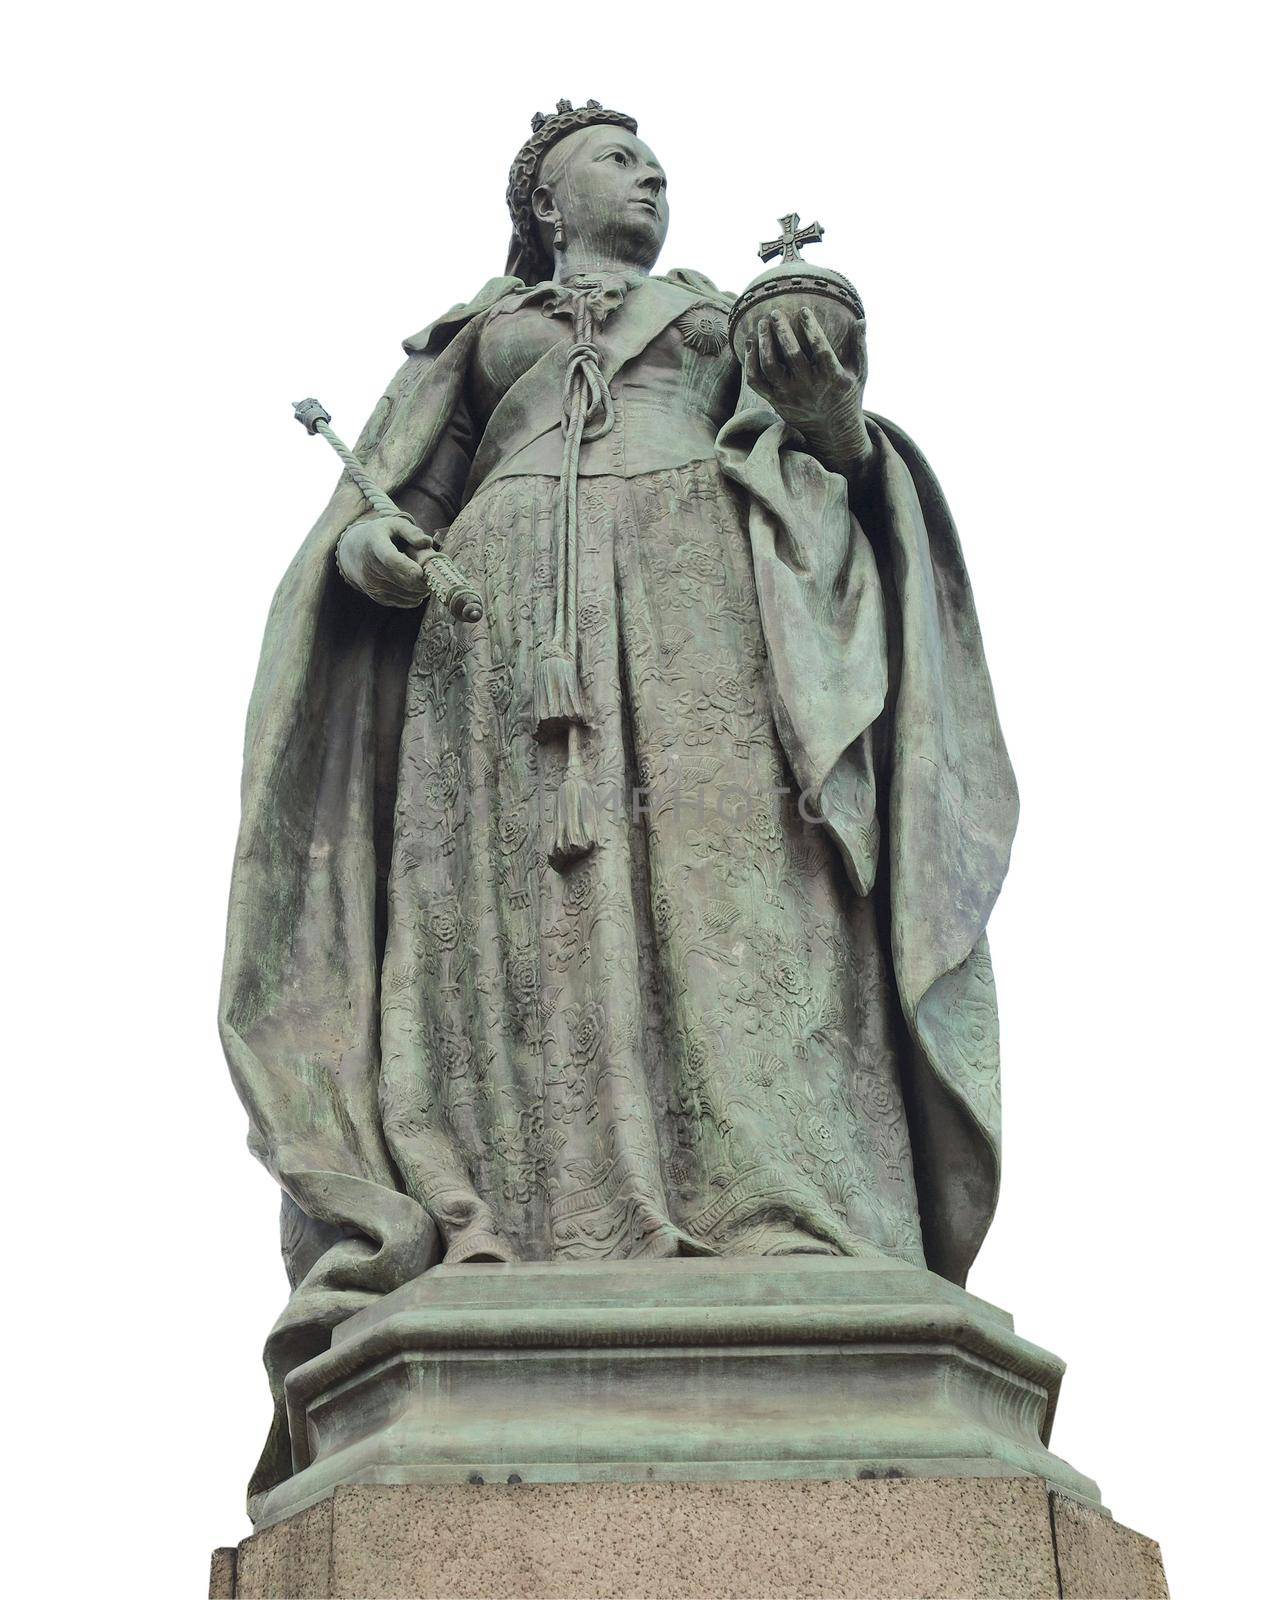 Queen Victoria statue in Birmingham by claudiodivizia